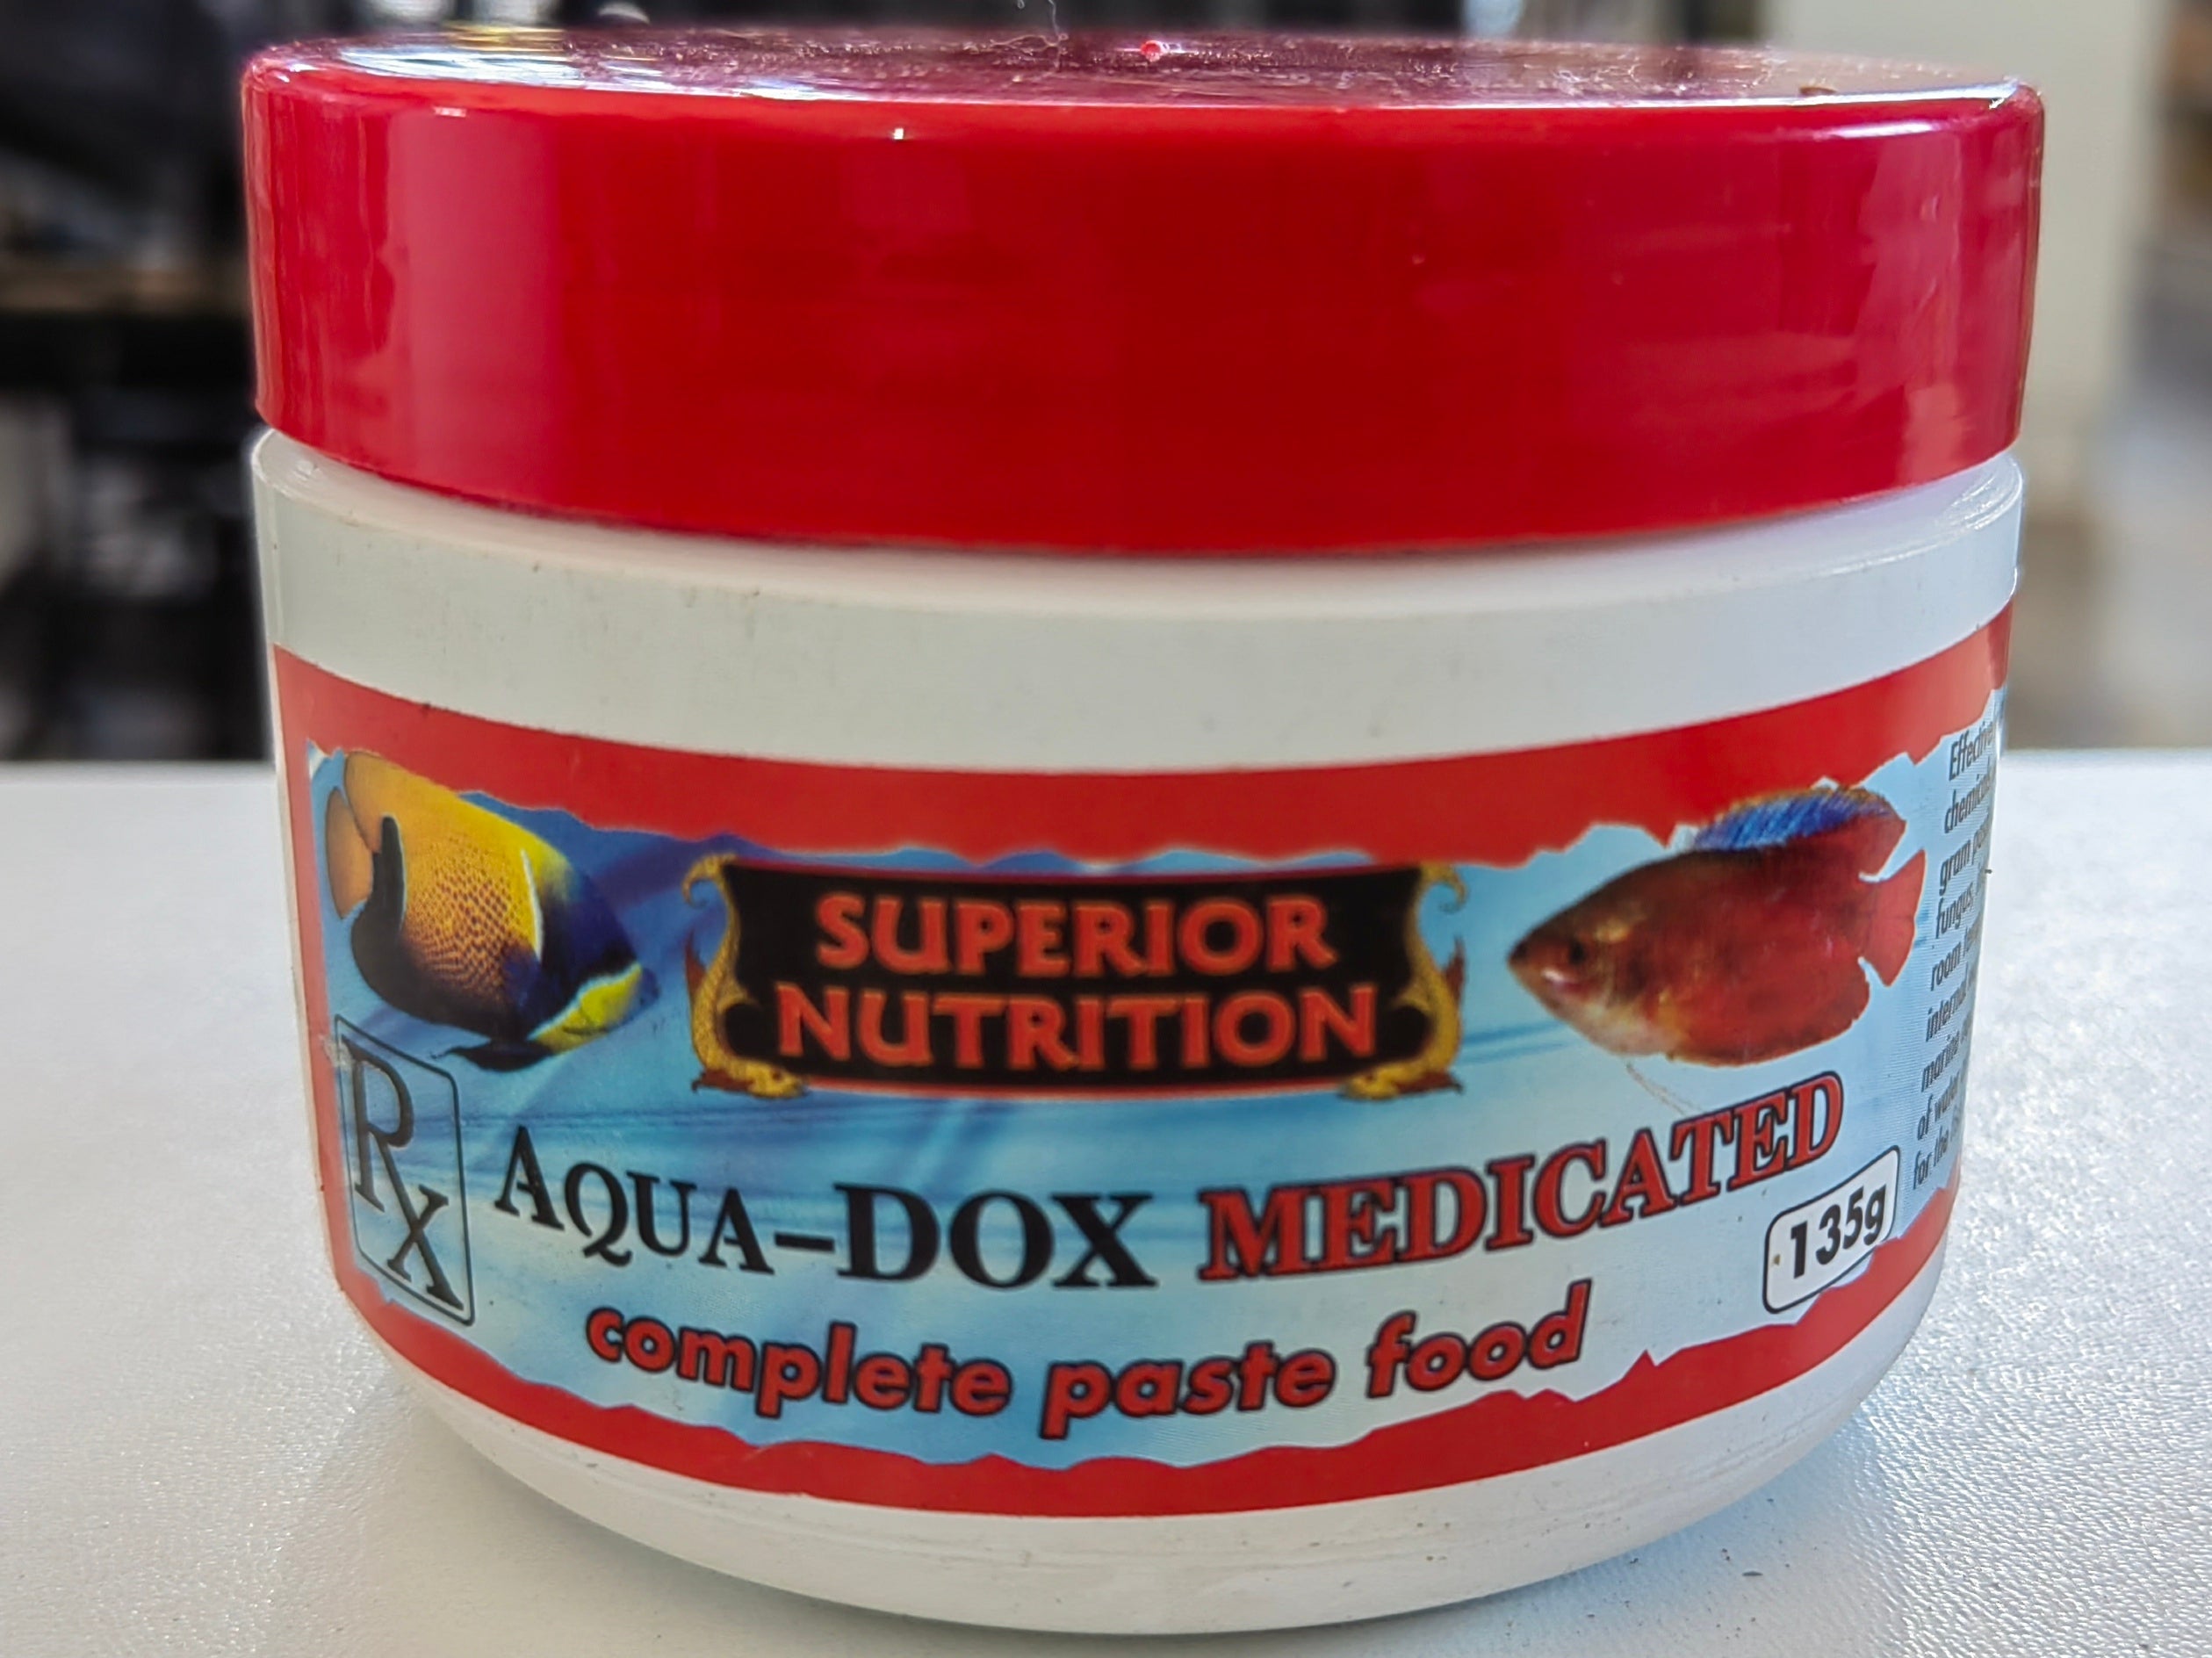 Superior Nutrition Aqua-Dox Medicated Paste Food 135g